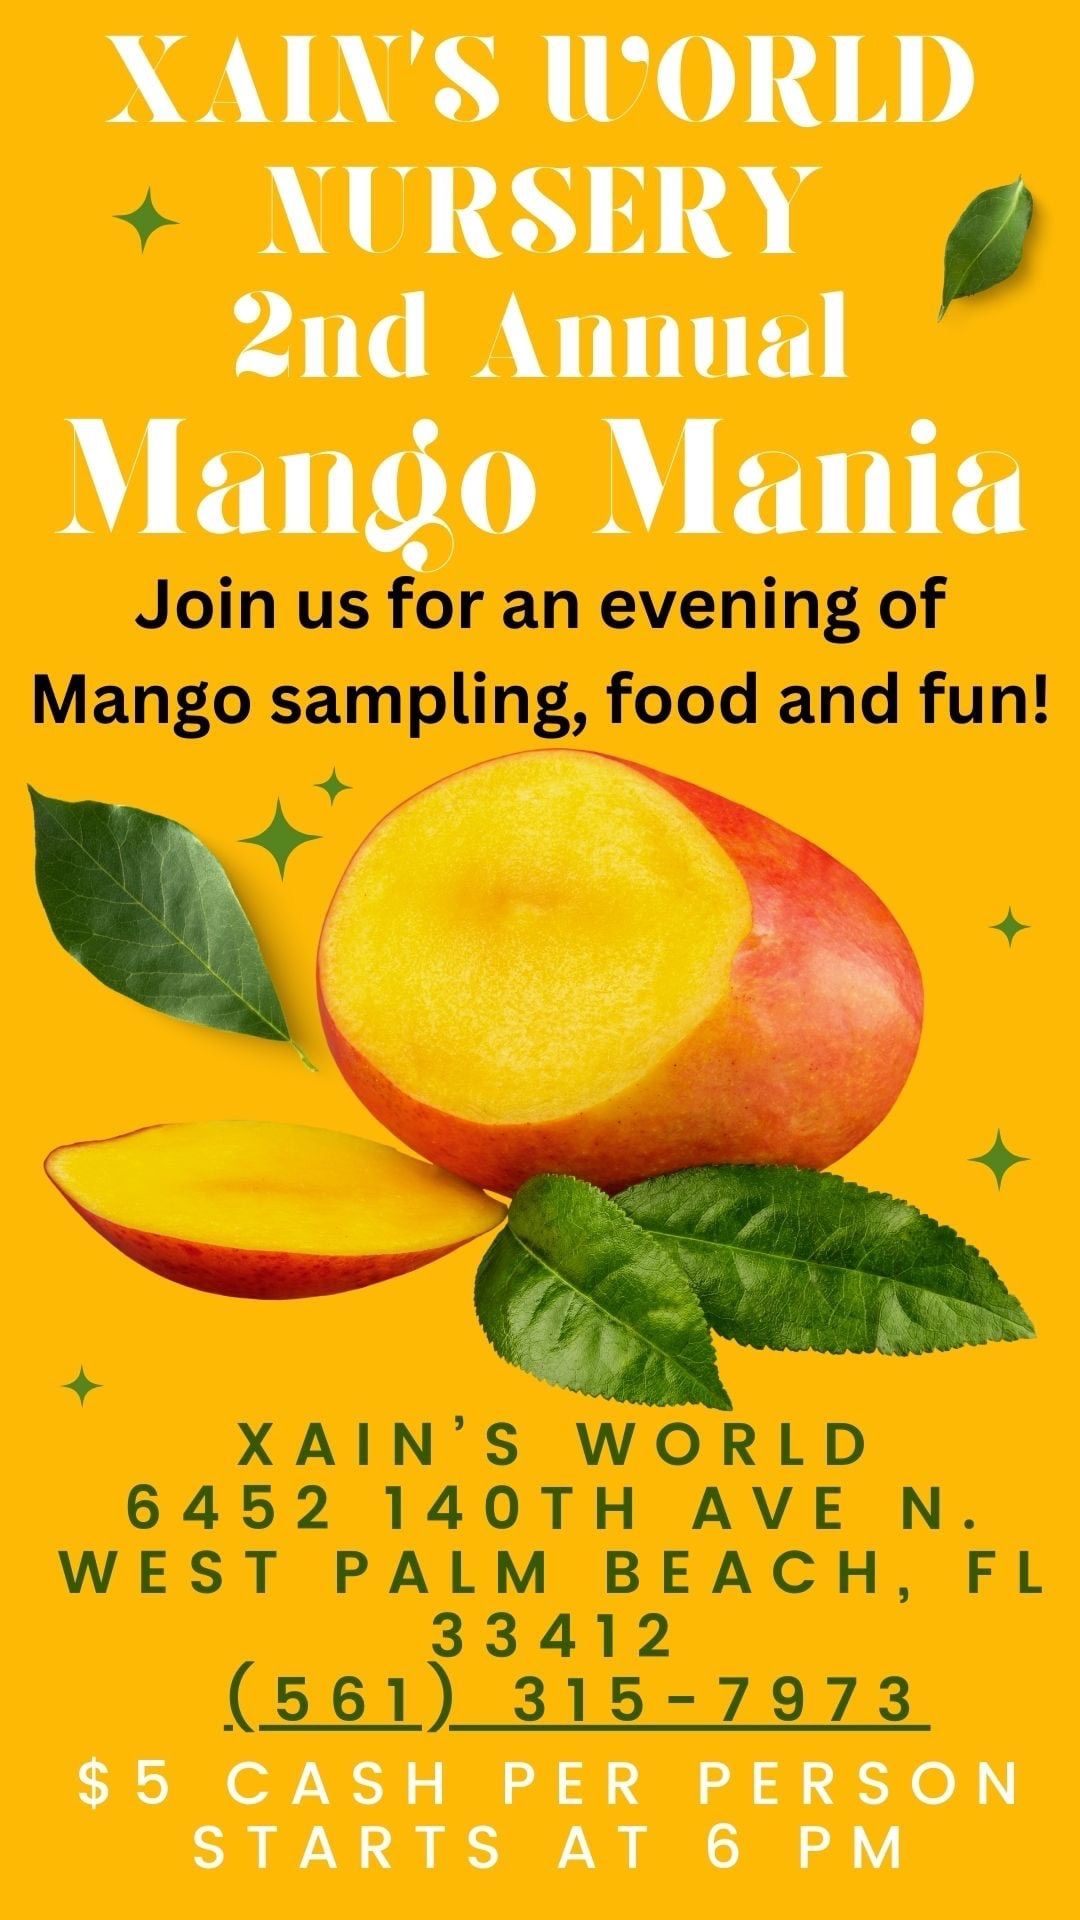 Mango mania 